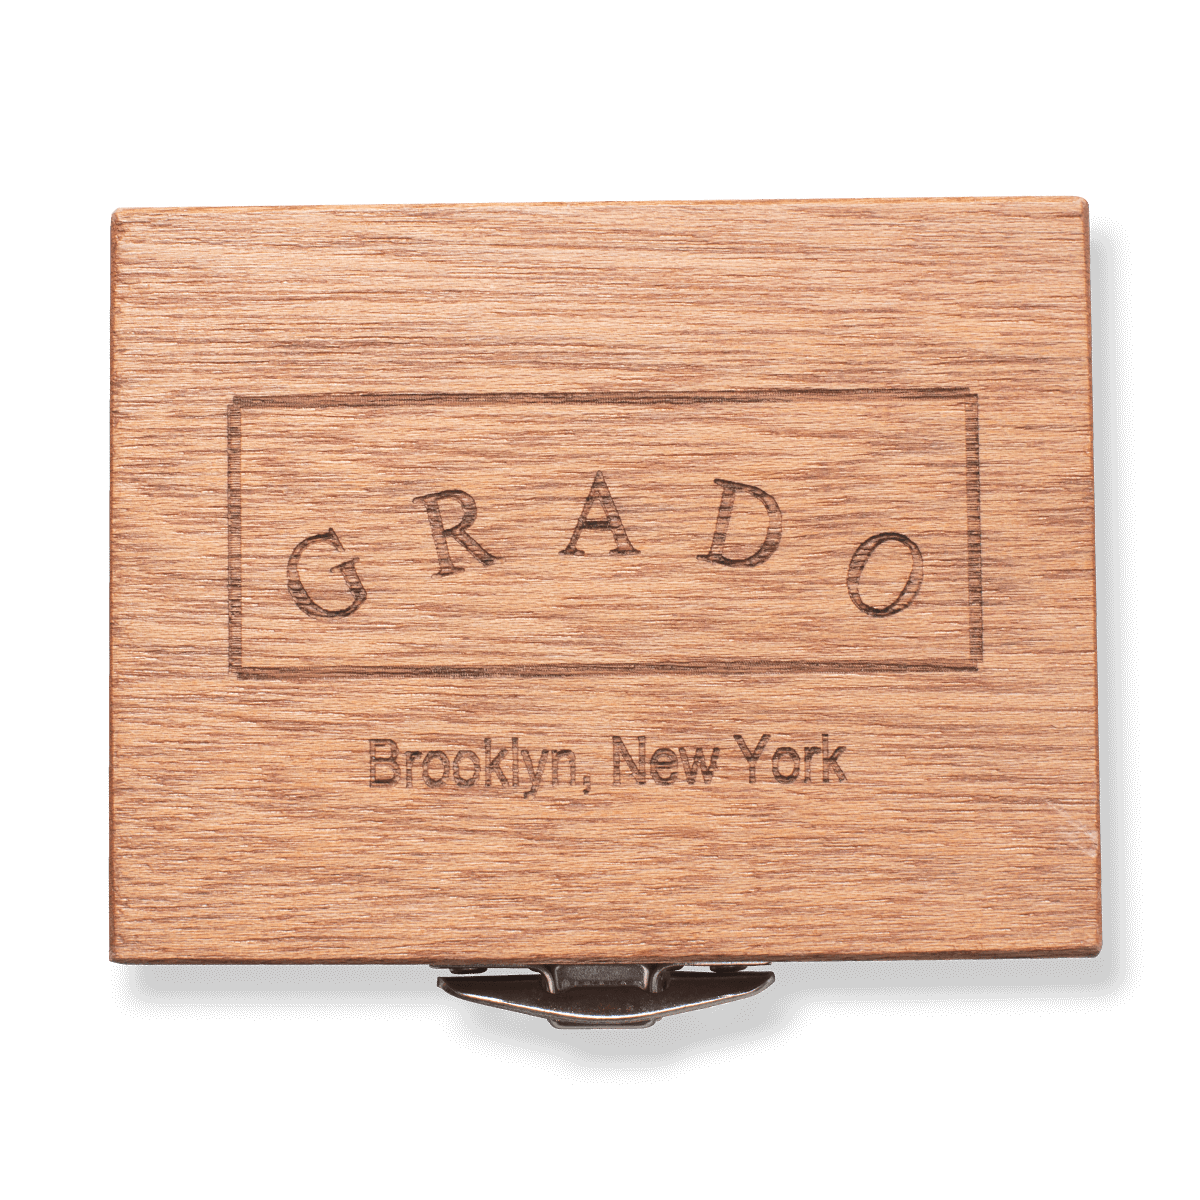 Grado Timbre Master 3 Phono Cartridge | Turntables | Paragon Sight & Sound